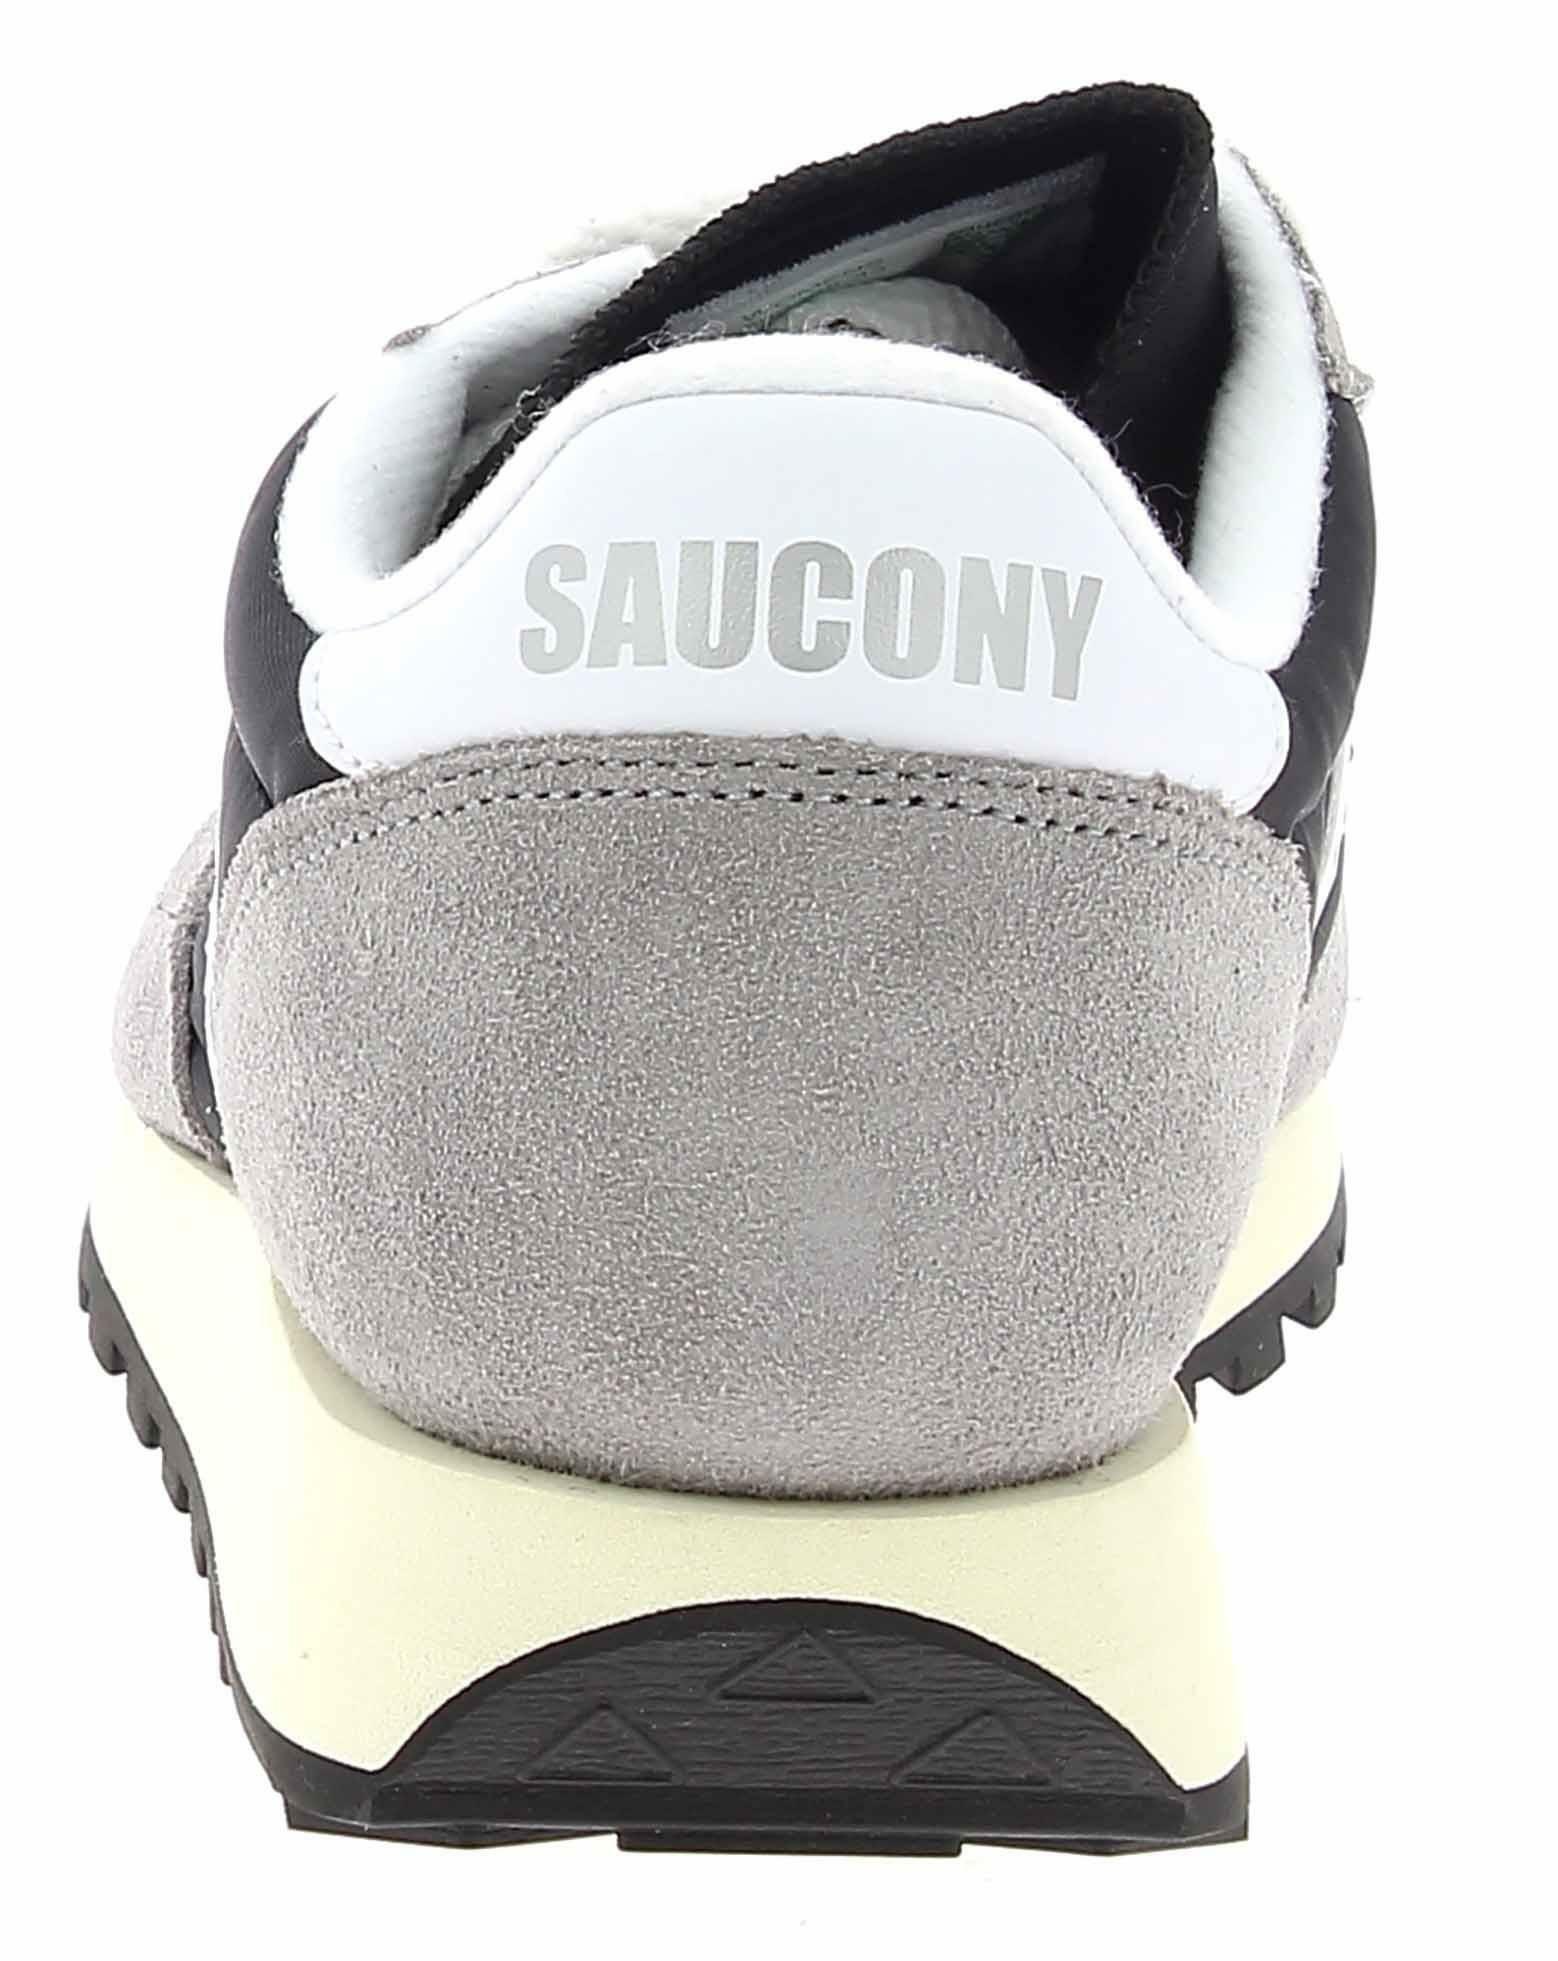 saucony saucony jazz original vintage scarpe sportive donna grigie s6036843